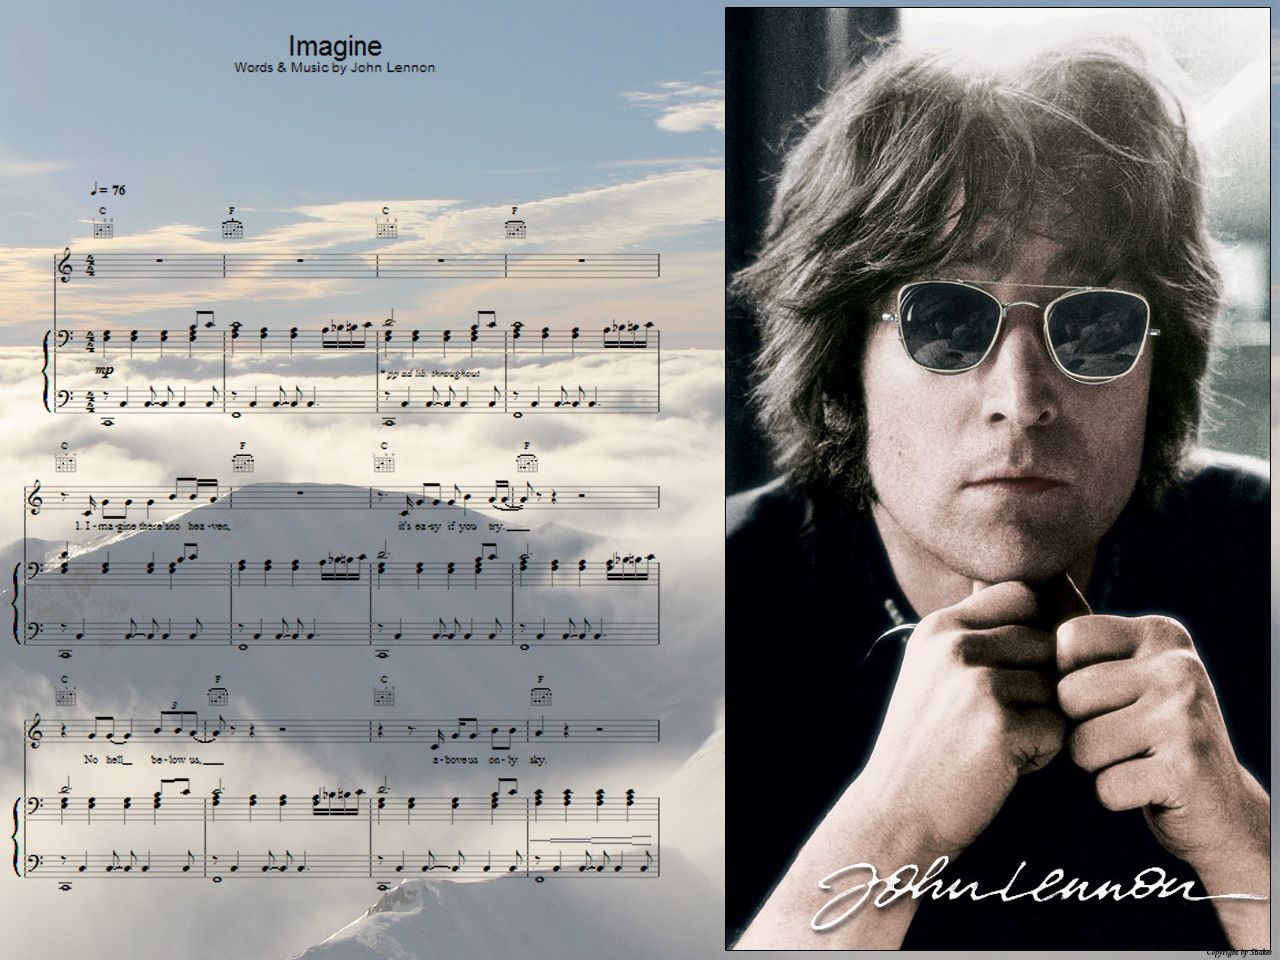 John Lennon - John Lennon Wallpaper (31566010) - Fanpop